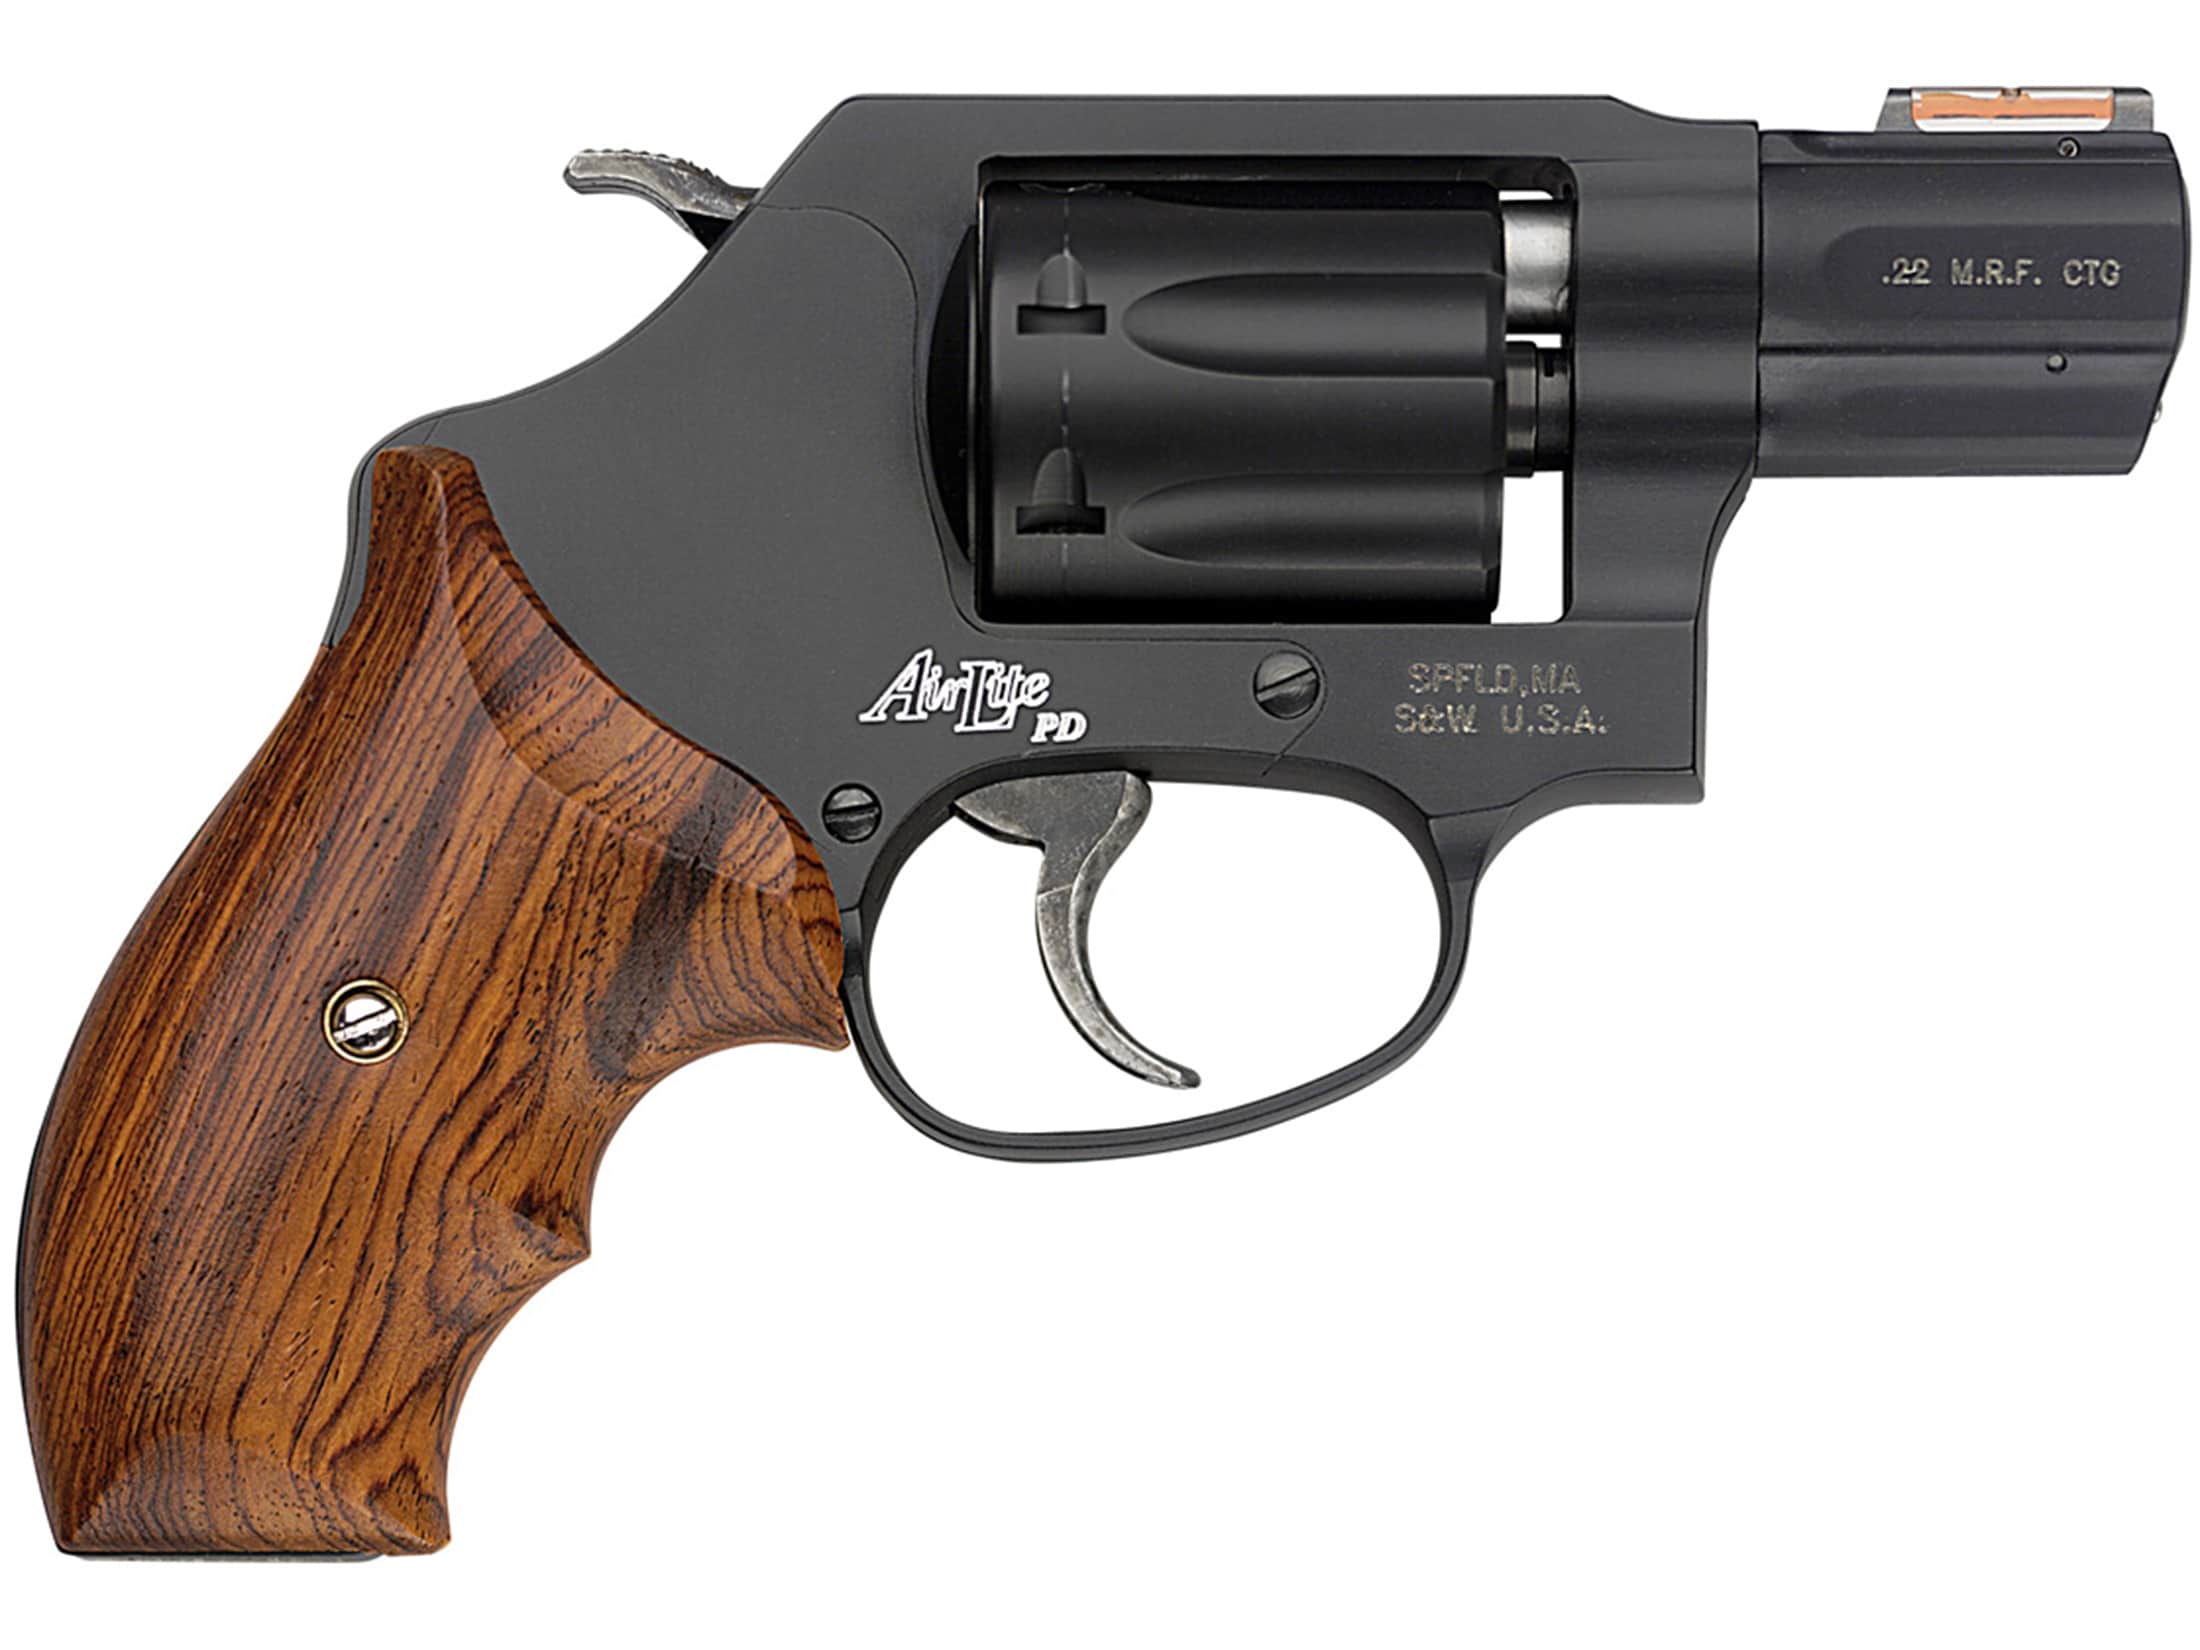 Image of Smith & Wesson 351 PD 22 Magnum 1.9" Barrel Wood Grip Matte Black 7rd